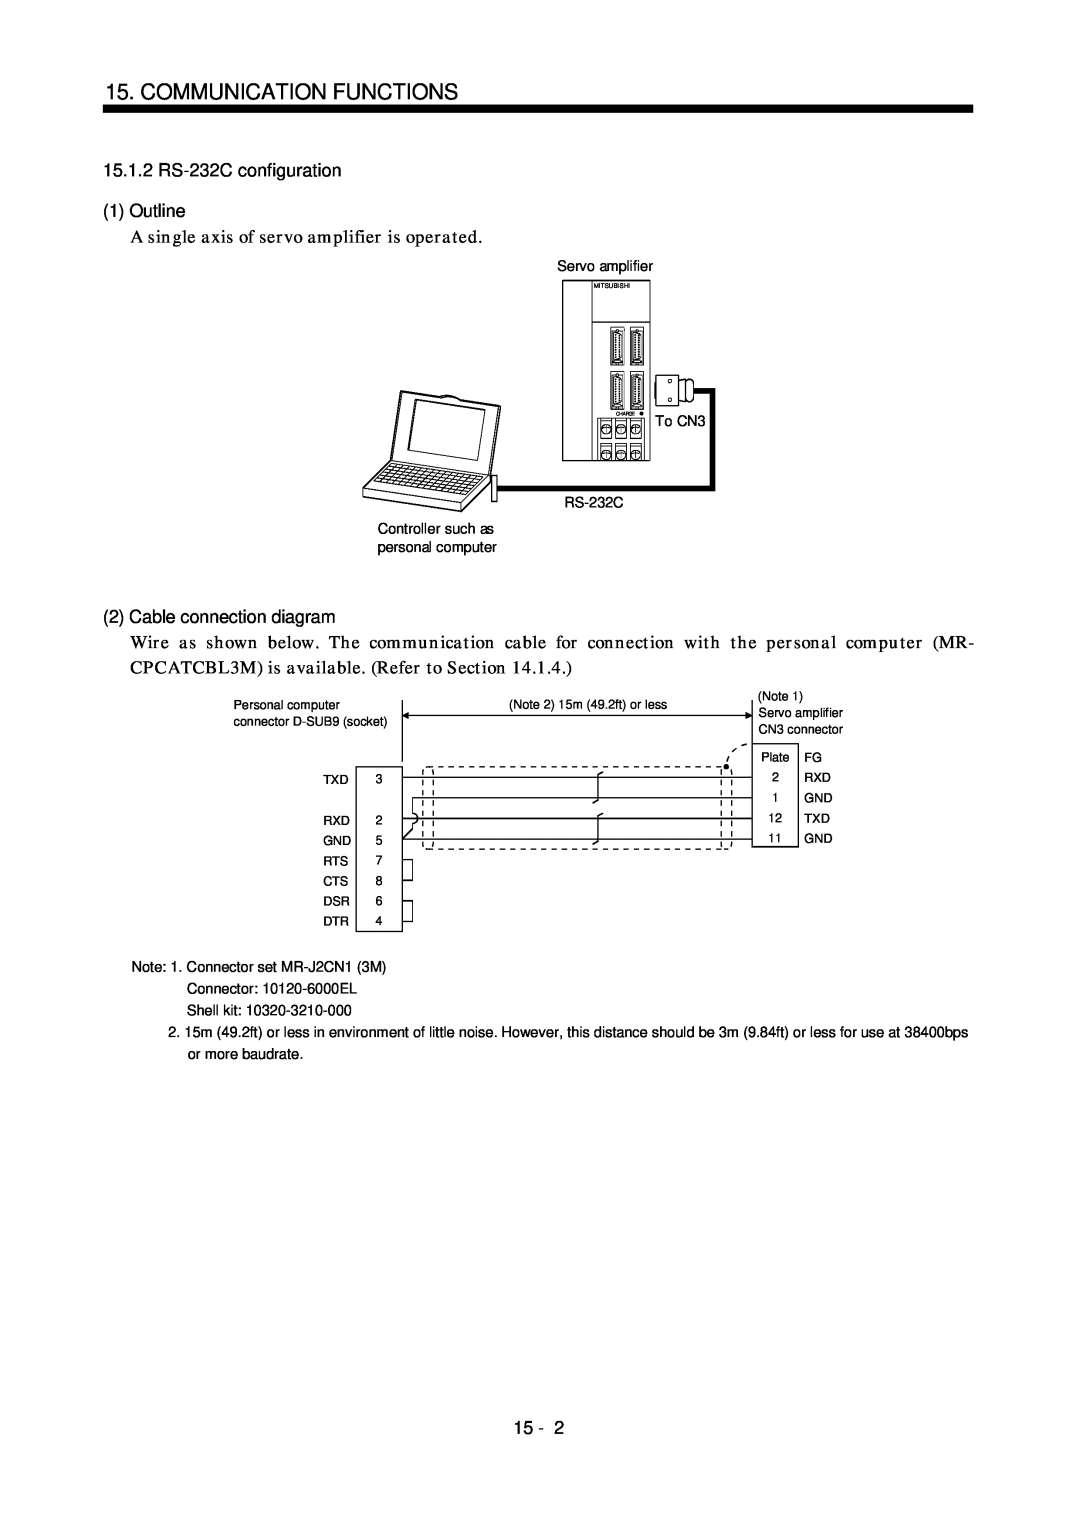 Mitsubishi Electronics MR-J2S- CL Communication Functions, 15.1.2 RS-232Cconfiguration 1Outline, 2Cable connection diagram 